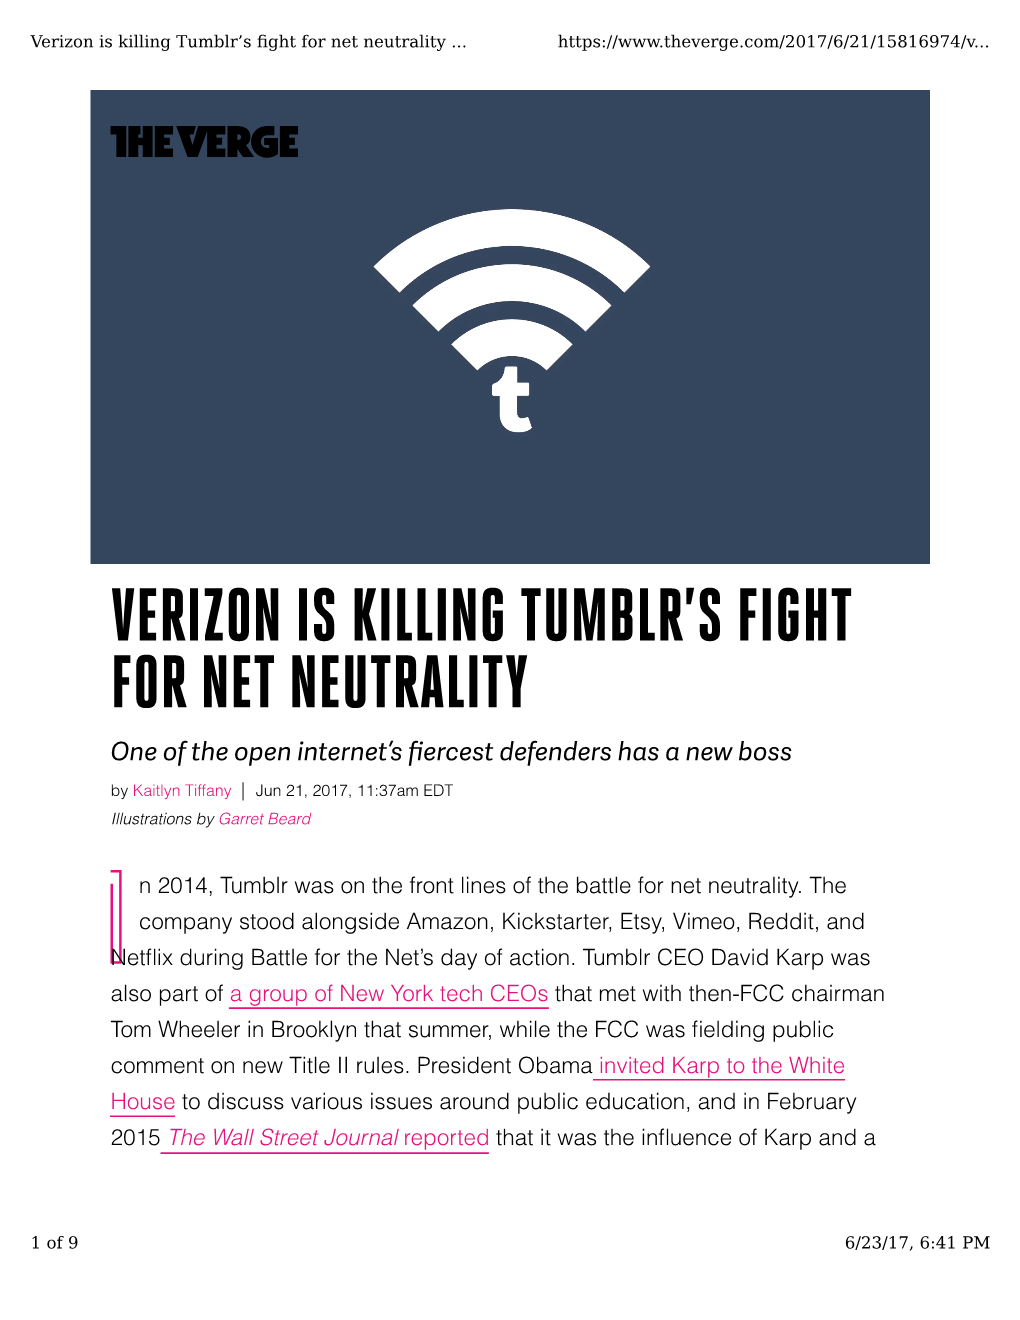 Verizon Is Killing Tumblr's Fight for Net Neutrality